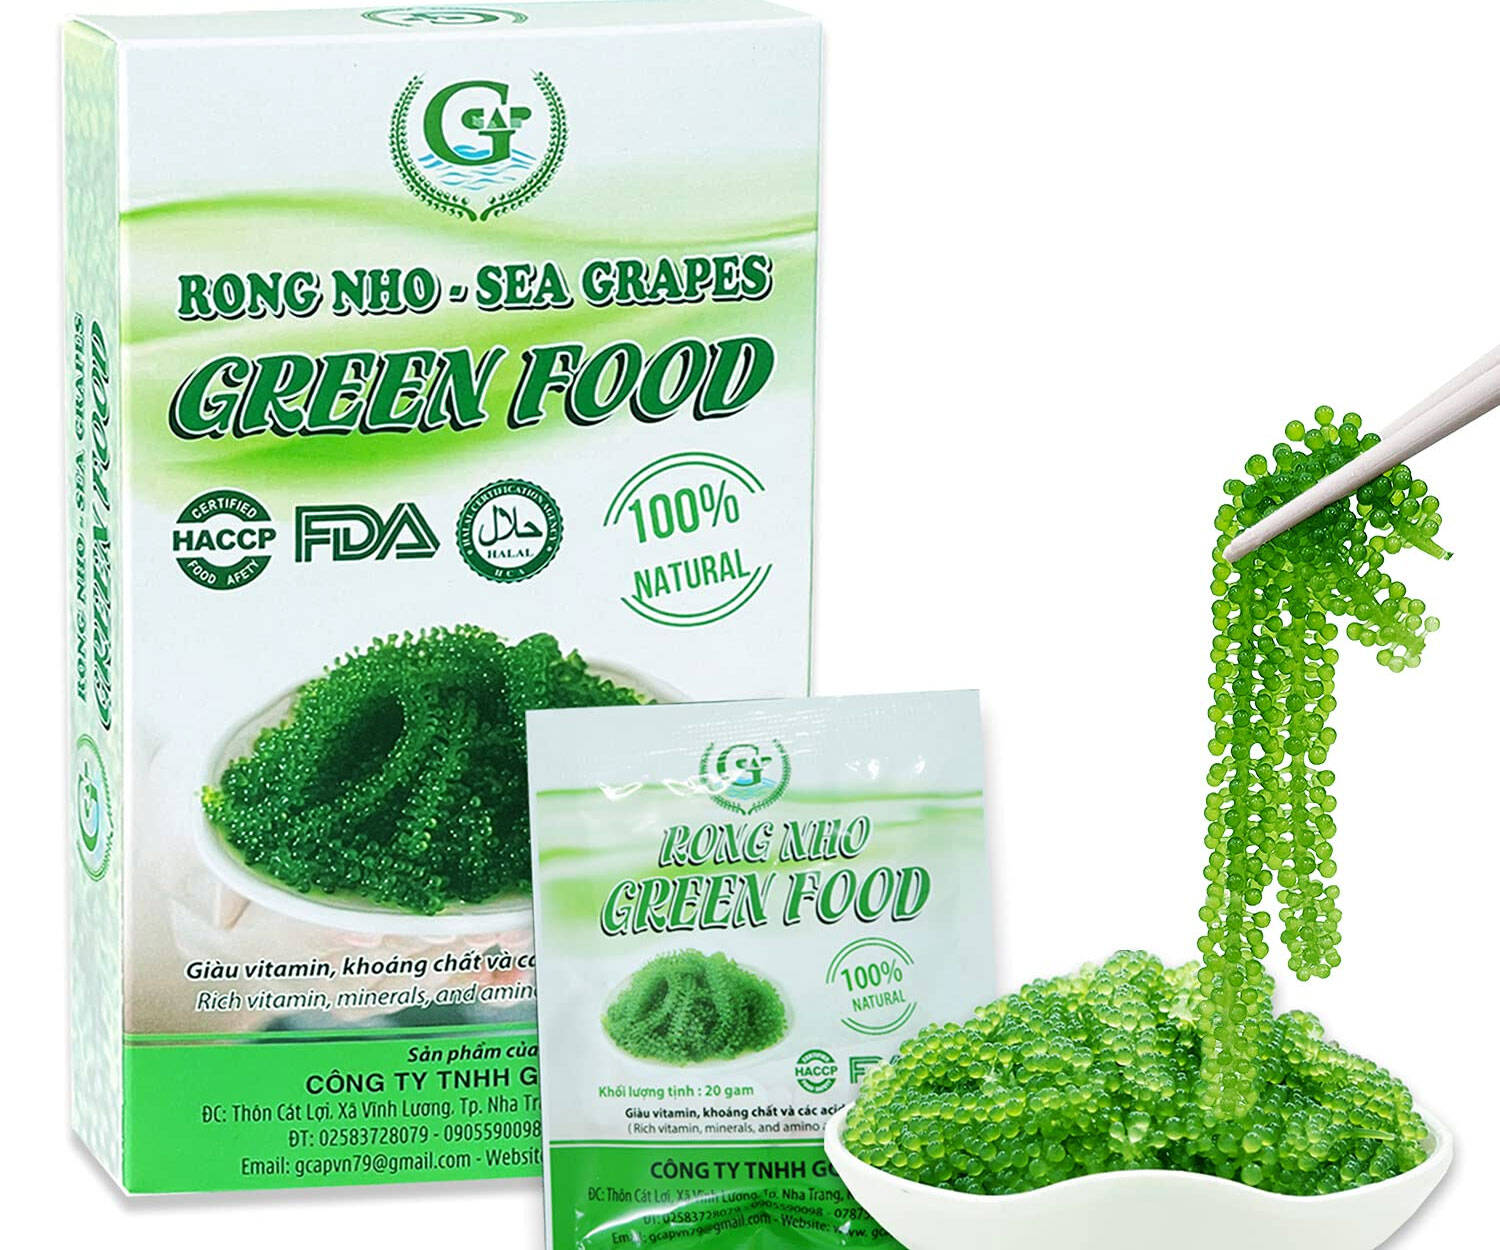 Sea Grapes Seaweed - //coolthings.us